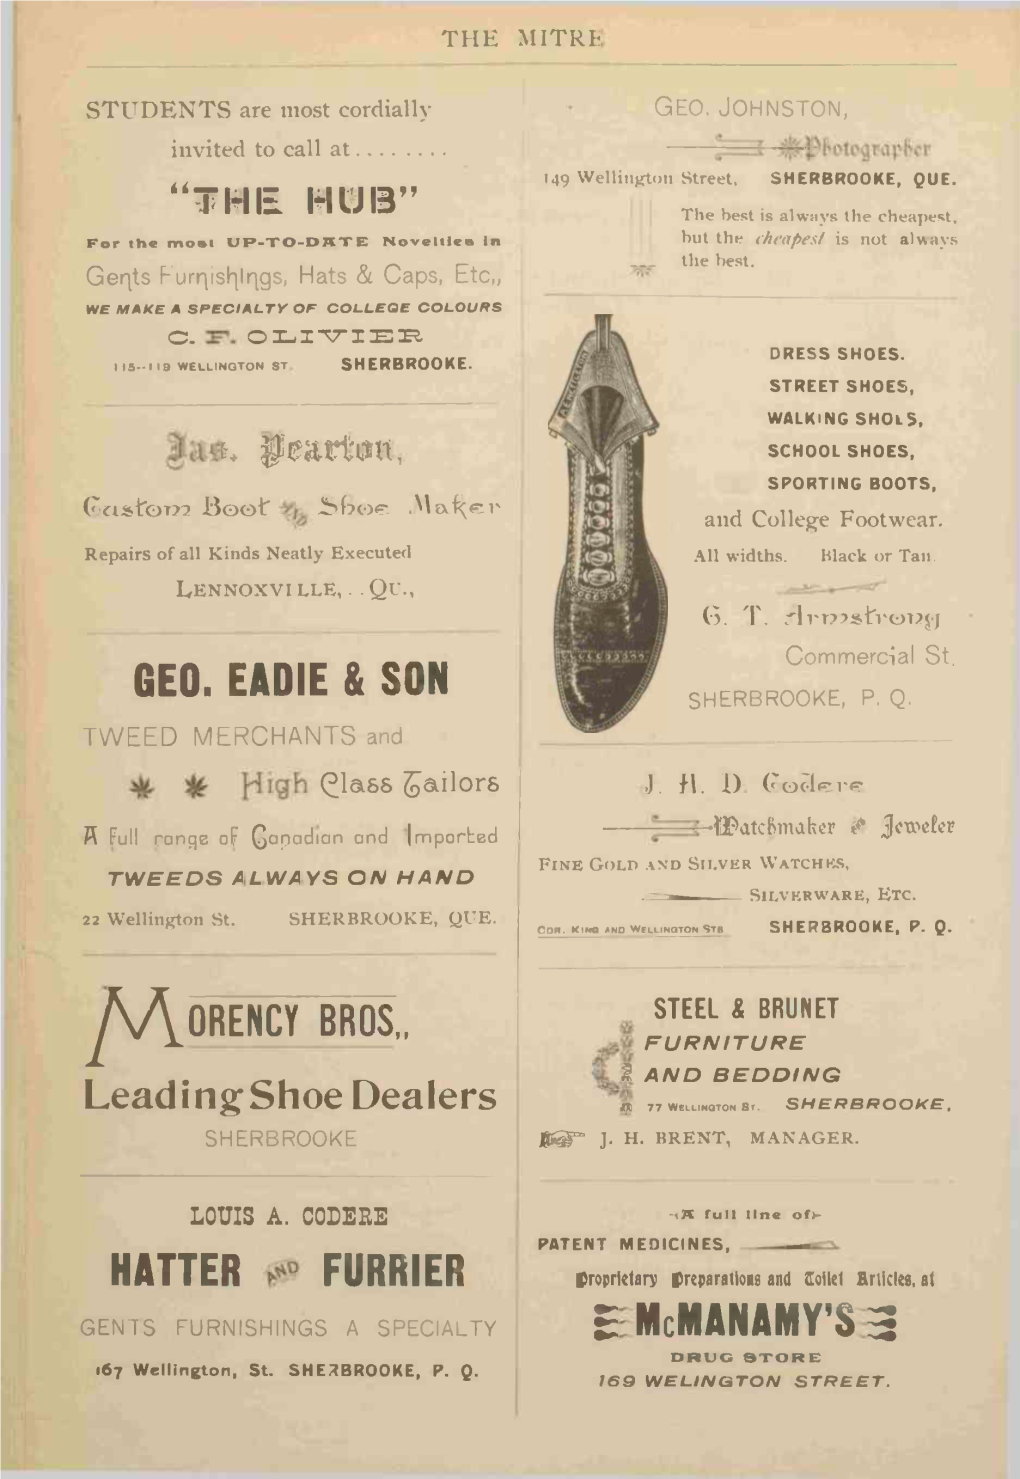 Jas. Pearton, Leading Shoe Dealers